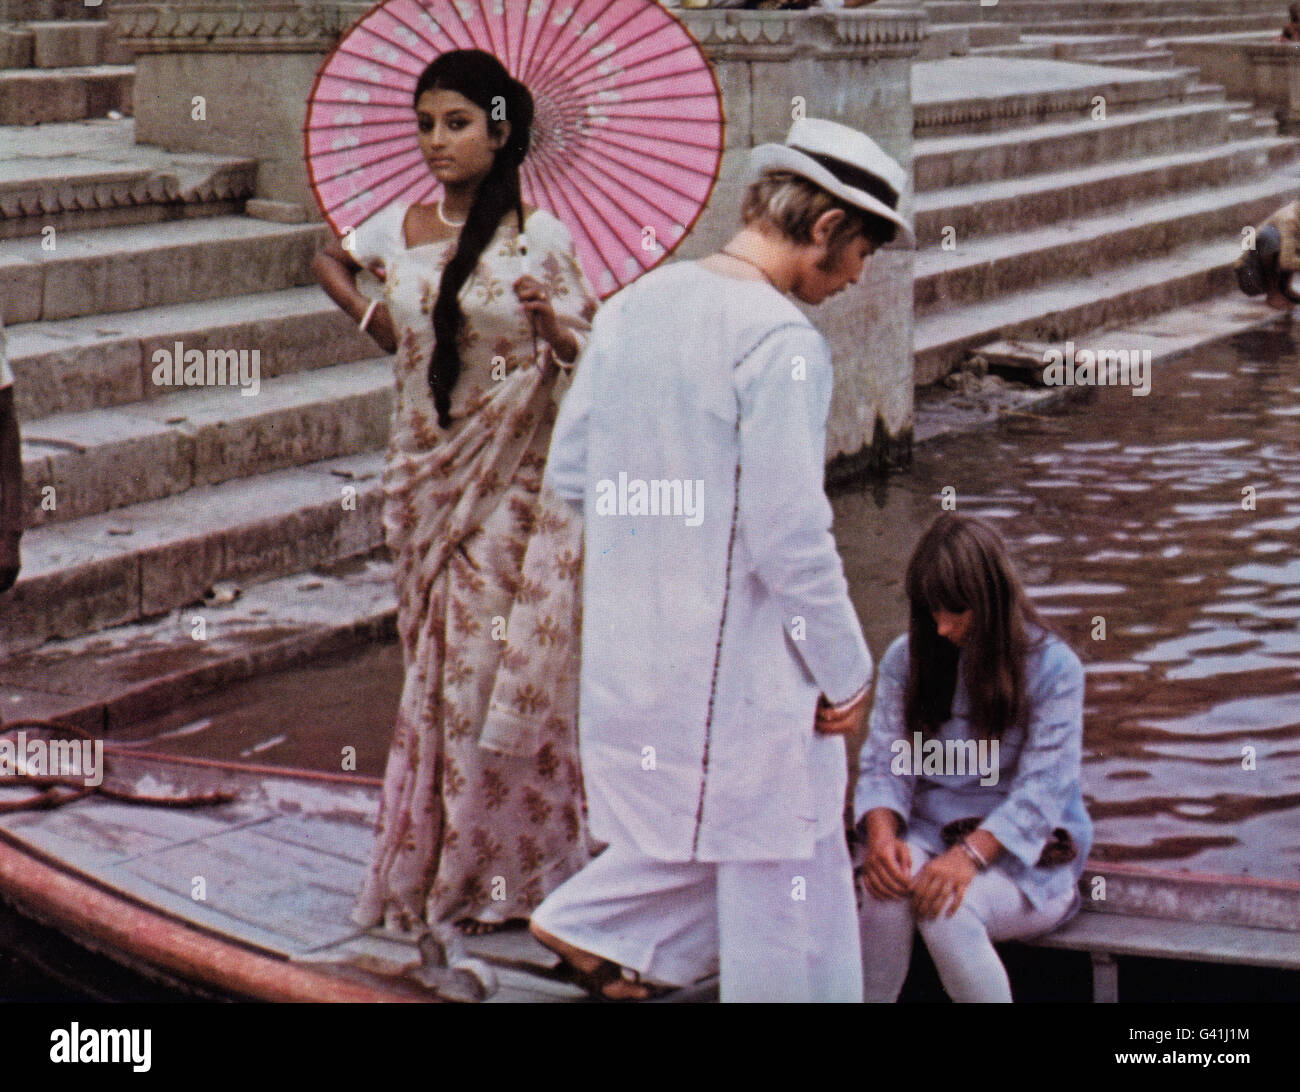 The Guru, USA/Indien 1969, Regie: James Ivory, Darsteller: Michael York, Rita Tushingham (rechts) Stock Photo